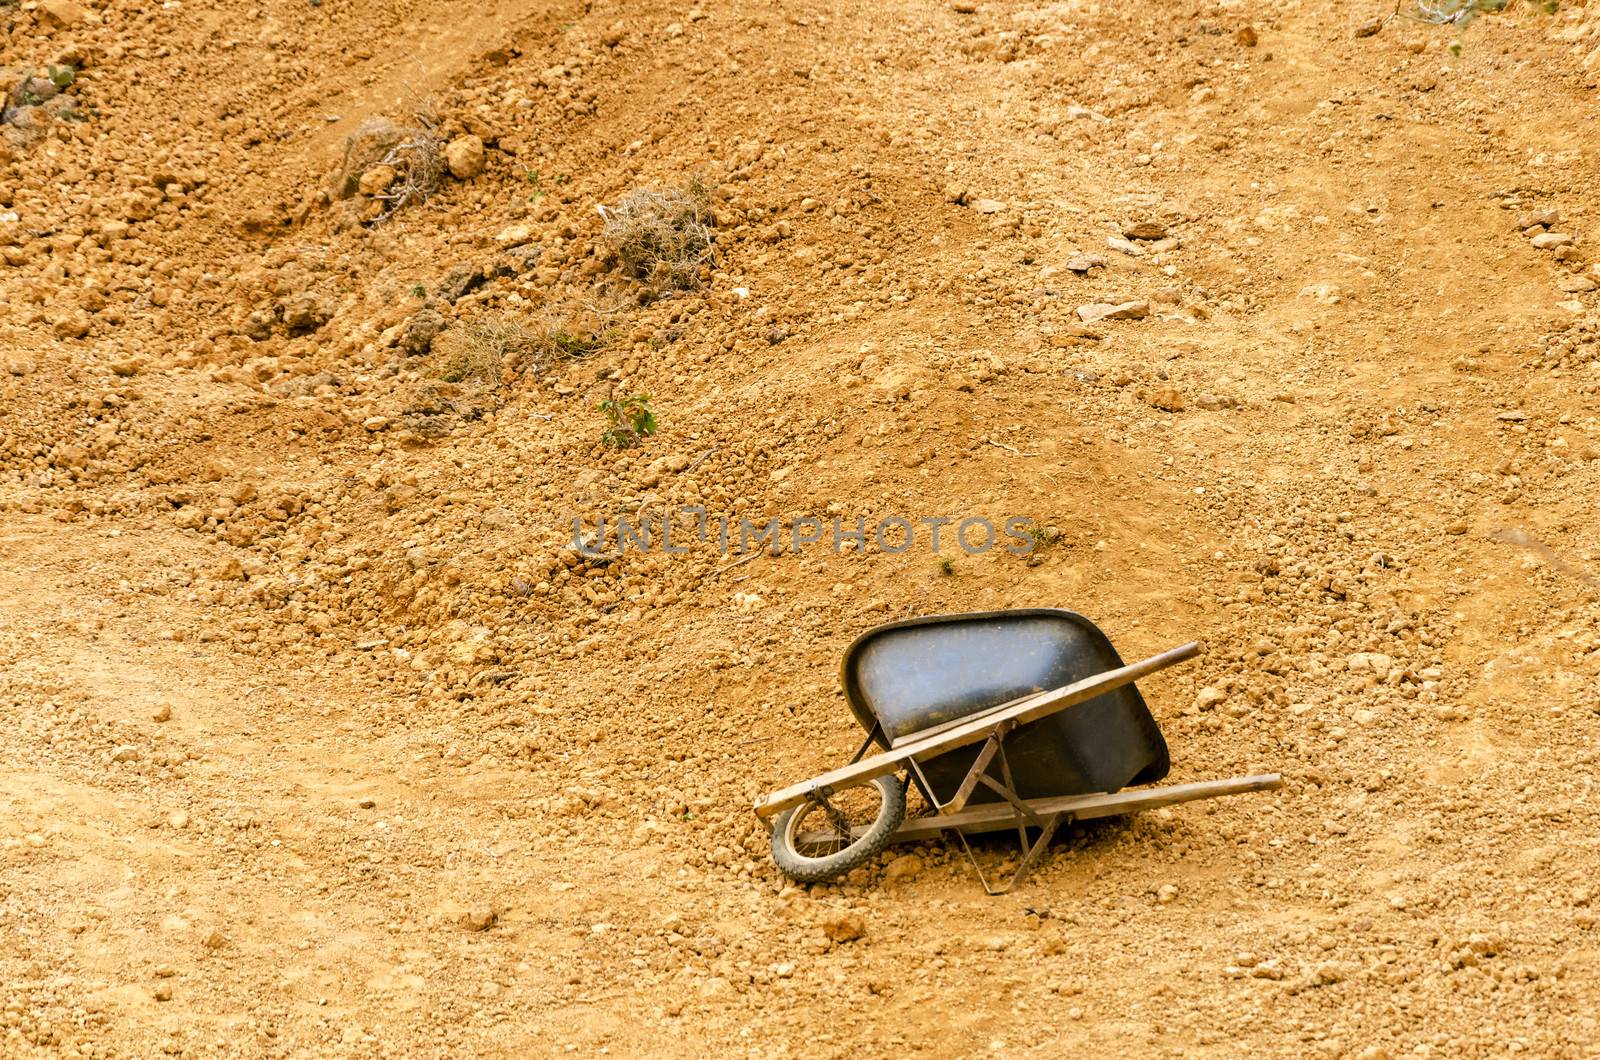 Black wheelbarrow in a dry barren setting